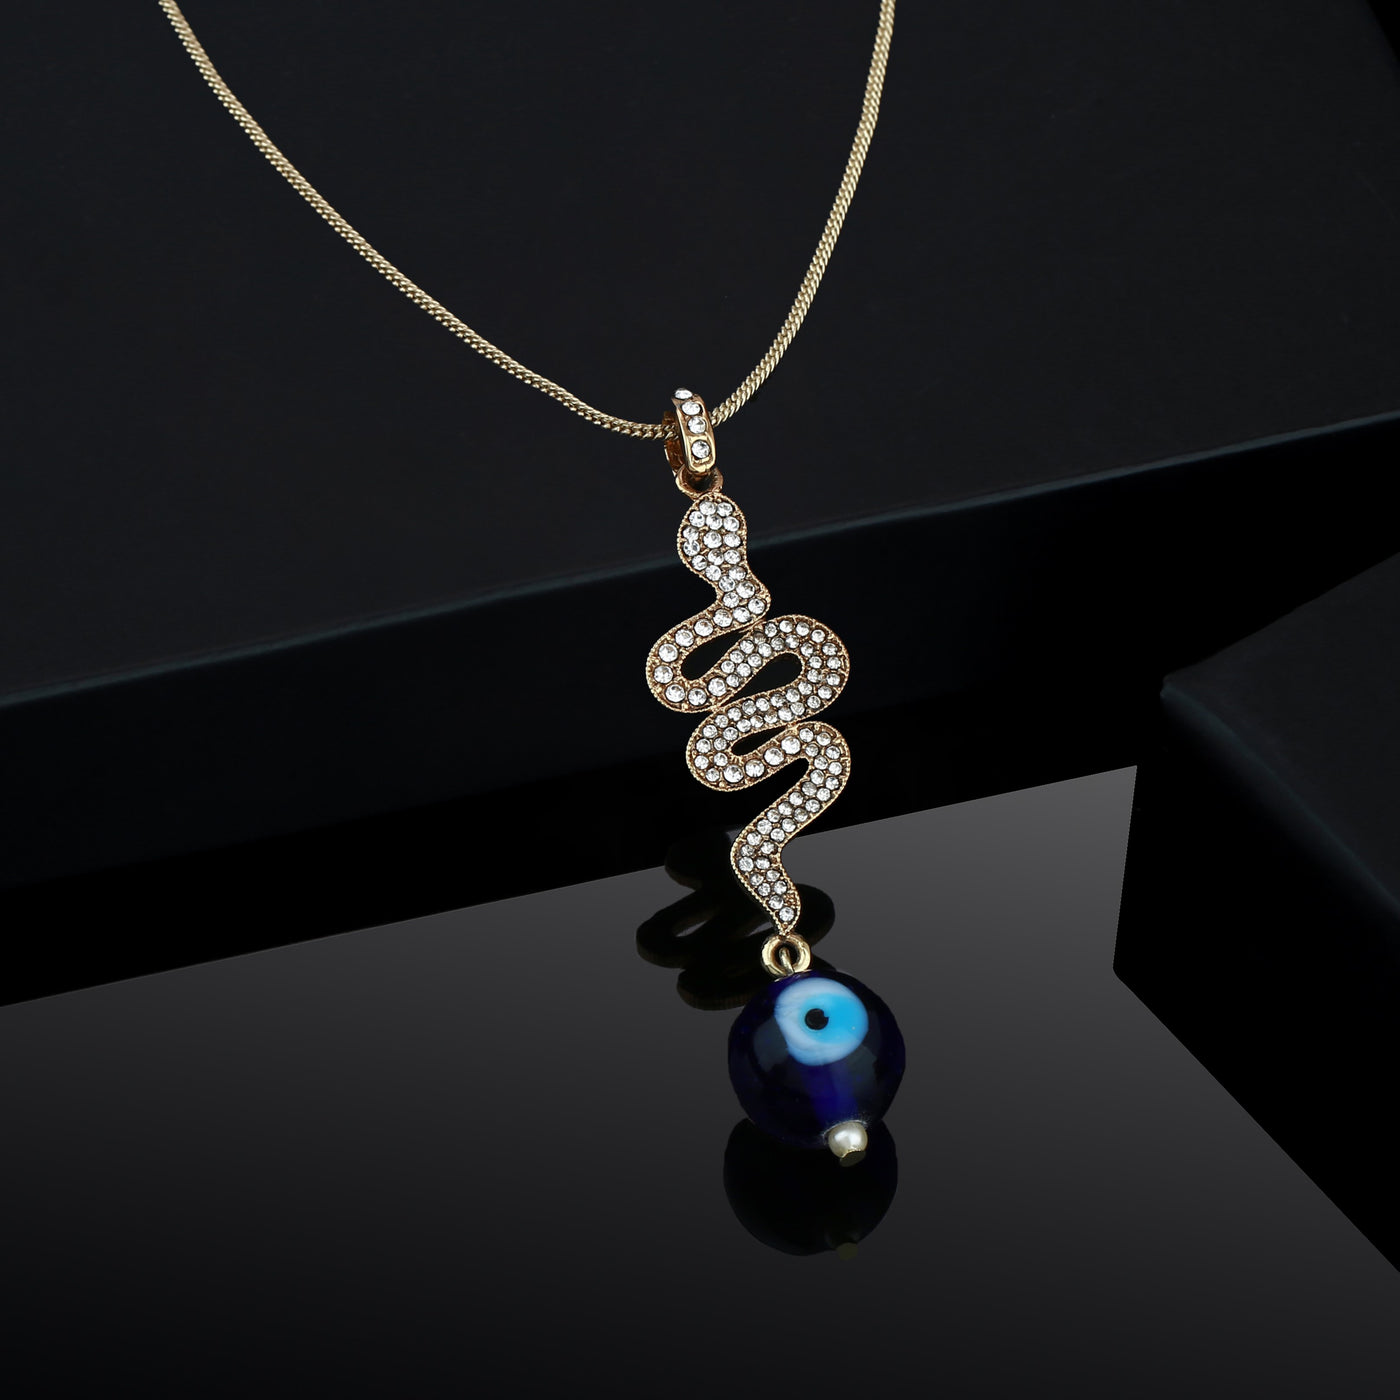 Estele - Gold Plated Chain with Evil Eye Snake Pendant for Women / Girls